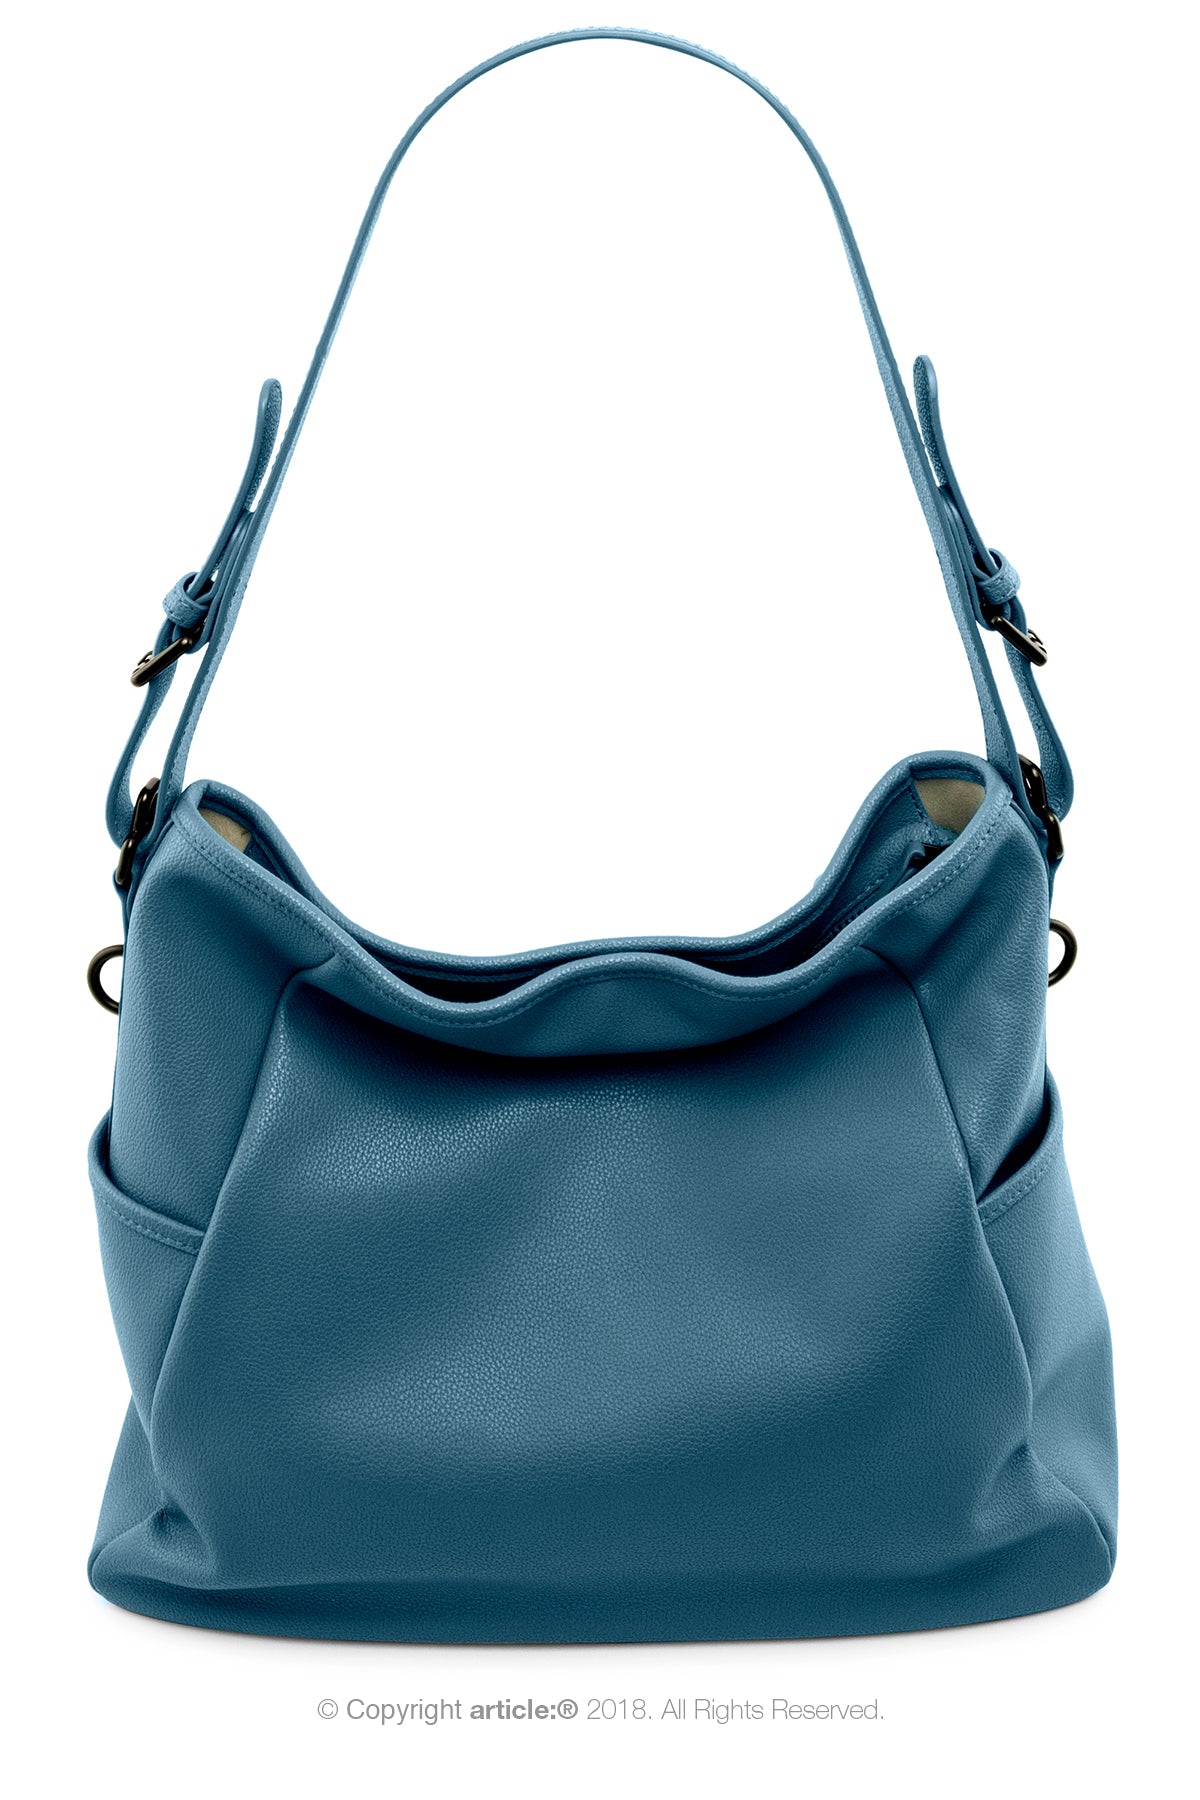 article: #130 Handbag Hobo - Prussian